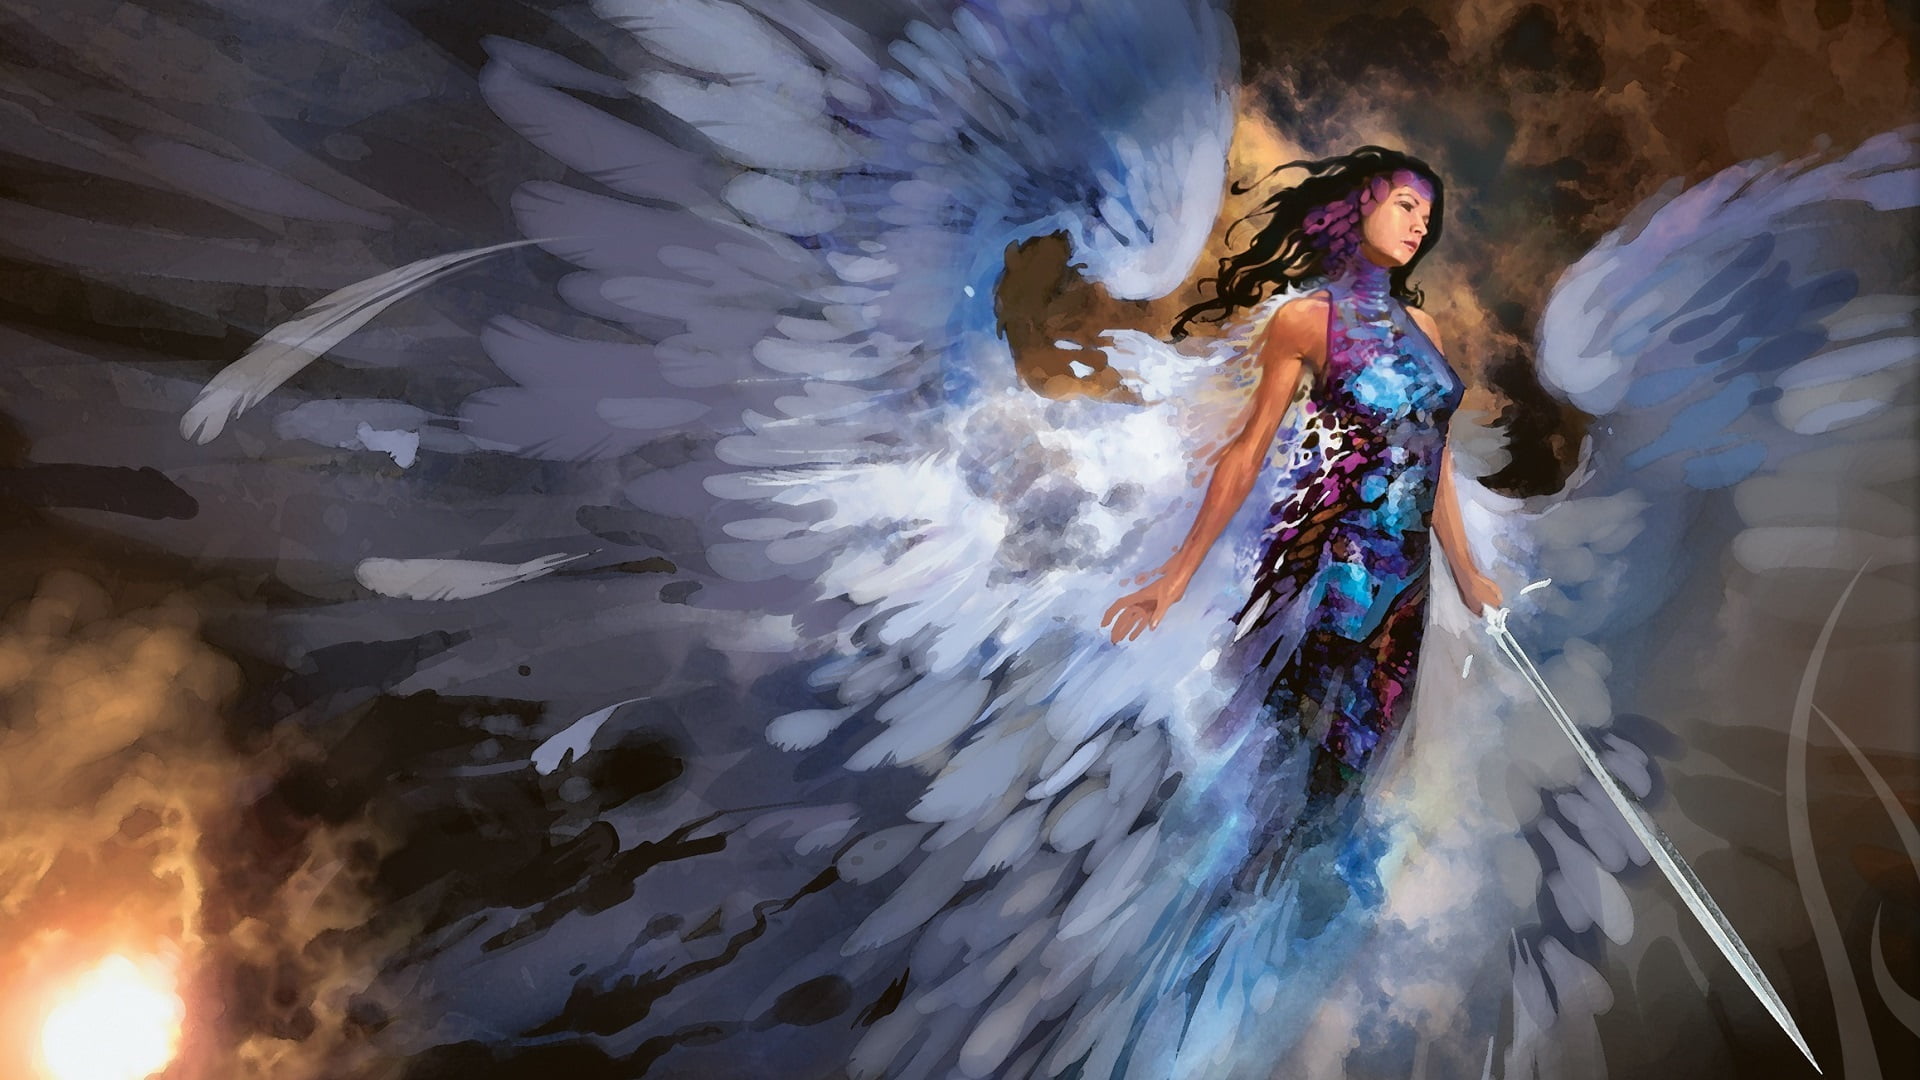 2560x1080 Resolution Female Angel Holding Sword Digital Wallpaper Artwork Fantasy Art Angel